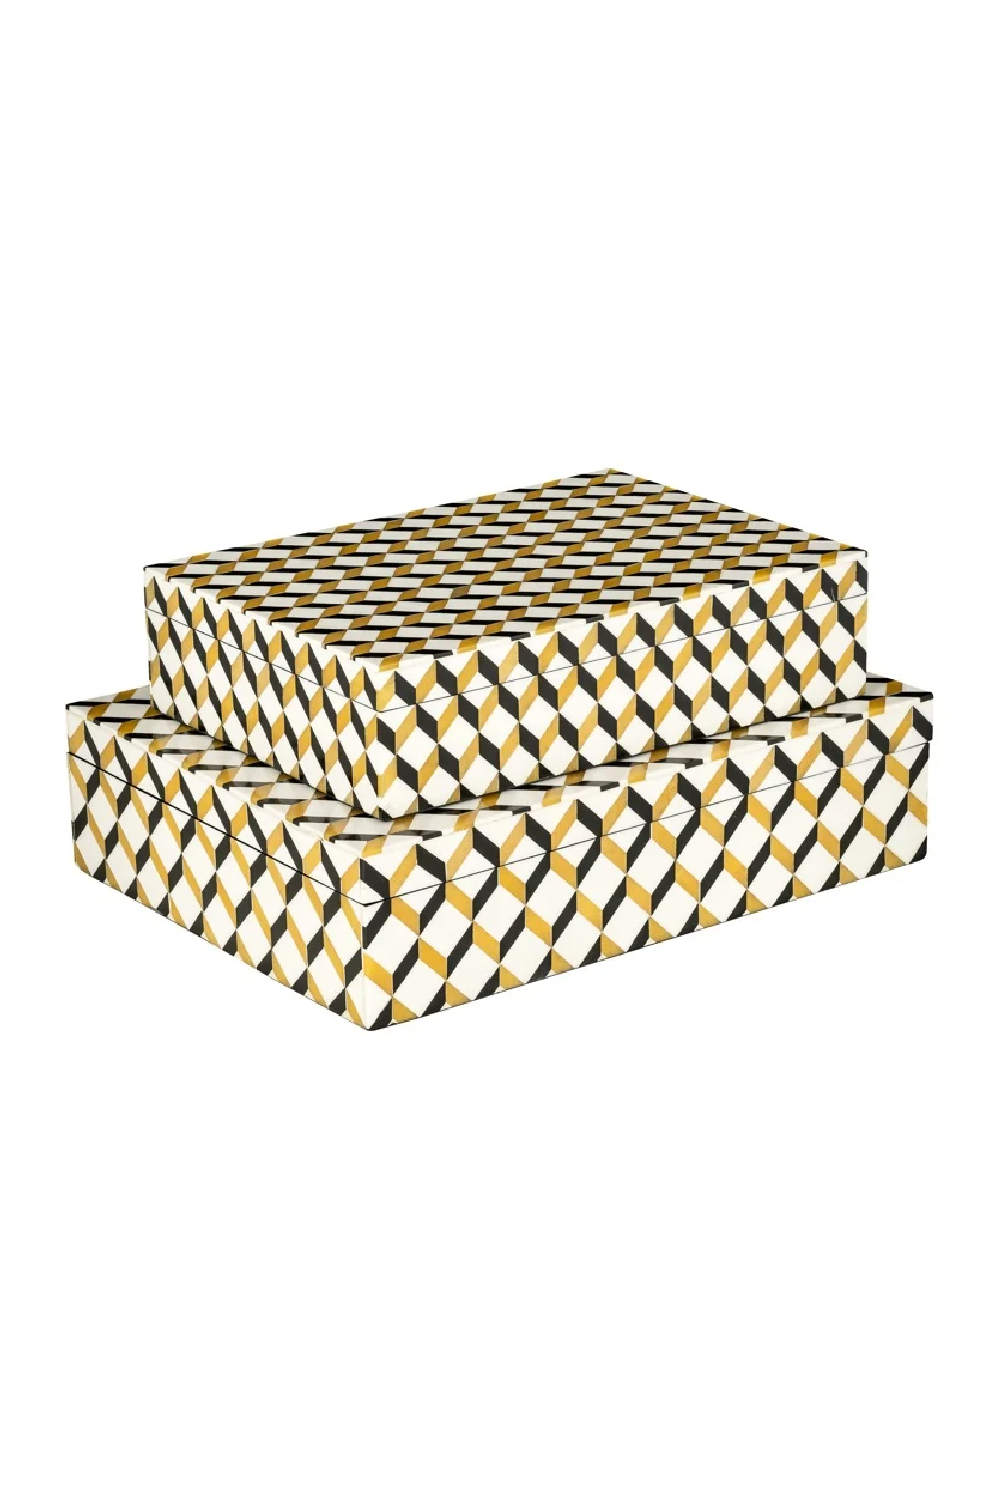 Geometric Patterned Storage Boxes (2) | OROA Frences | Oroa.com